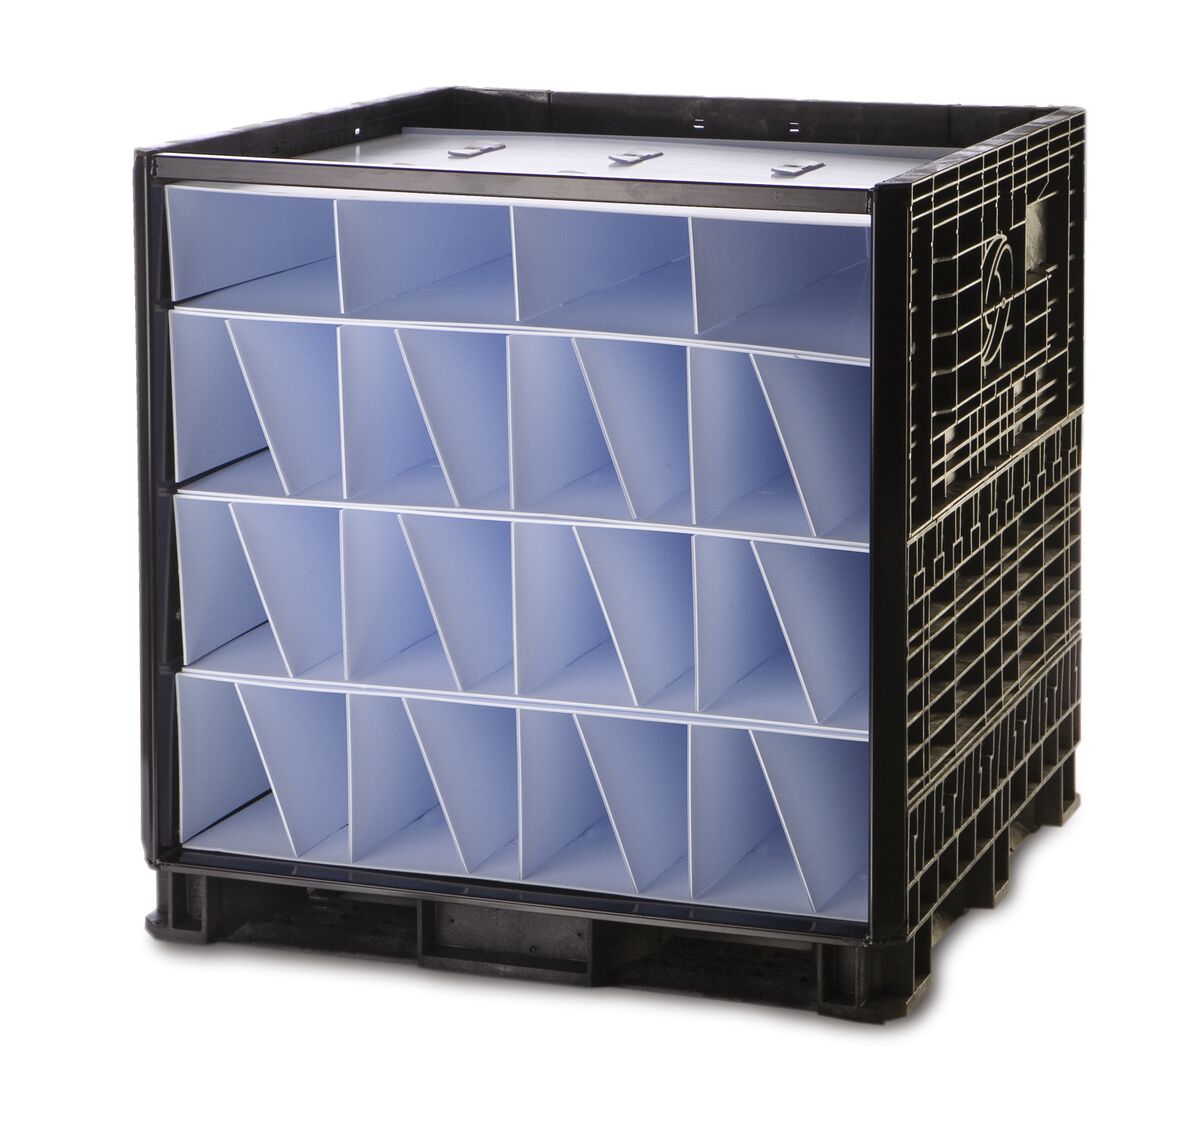 Storage Container Dubble-side – Slackline Press